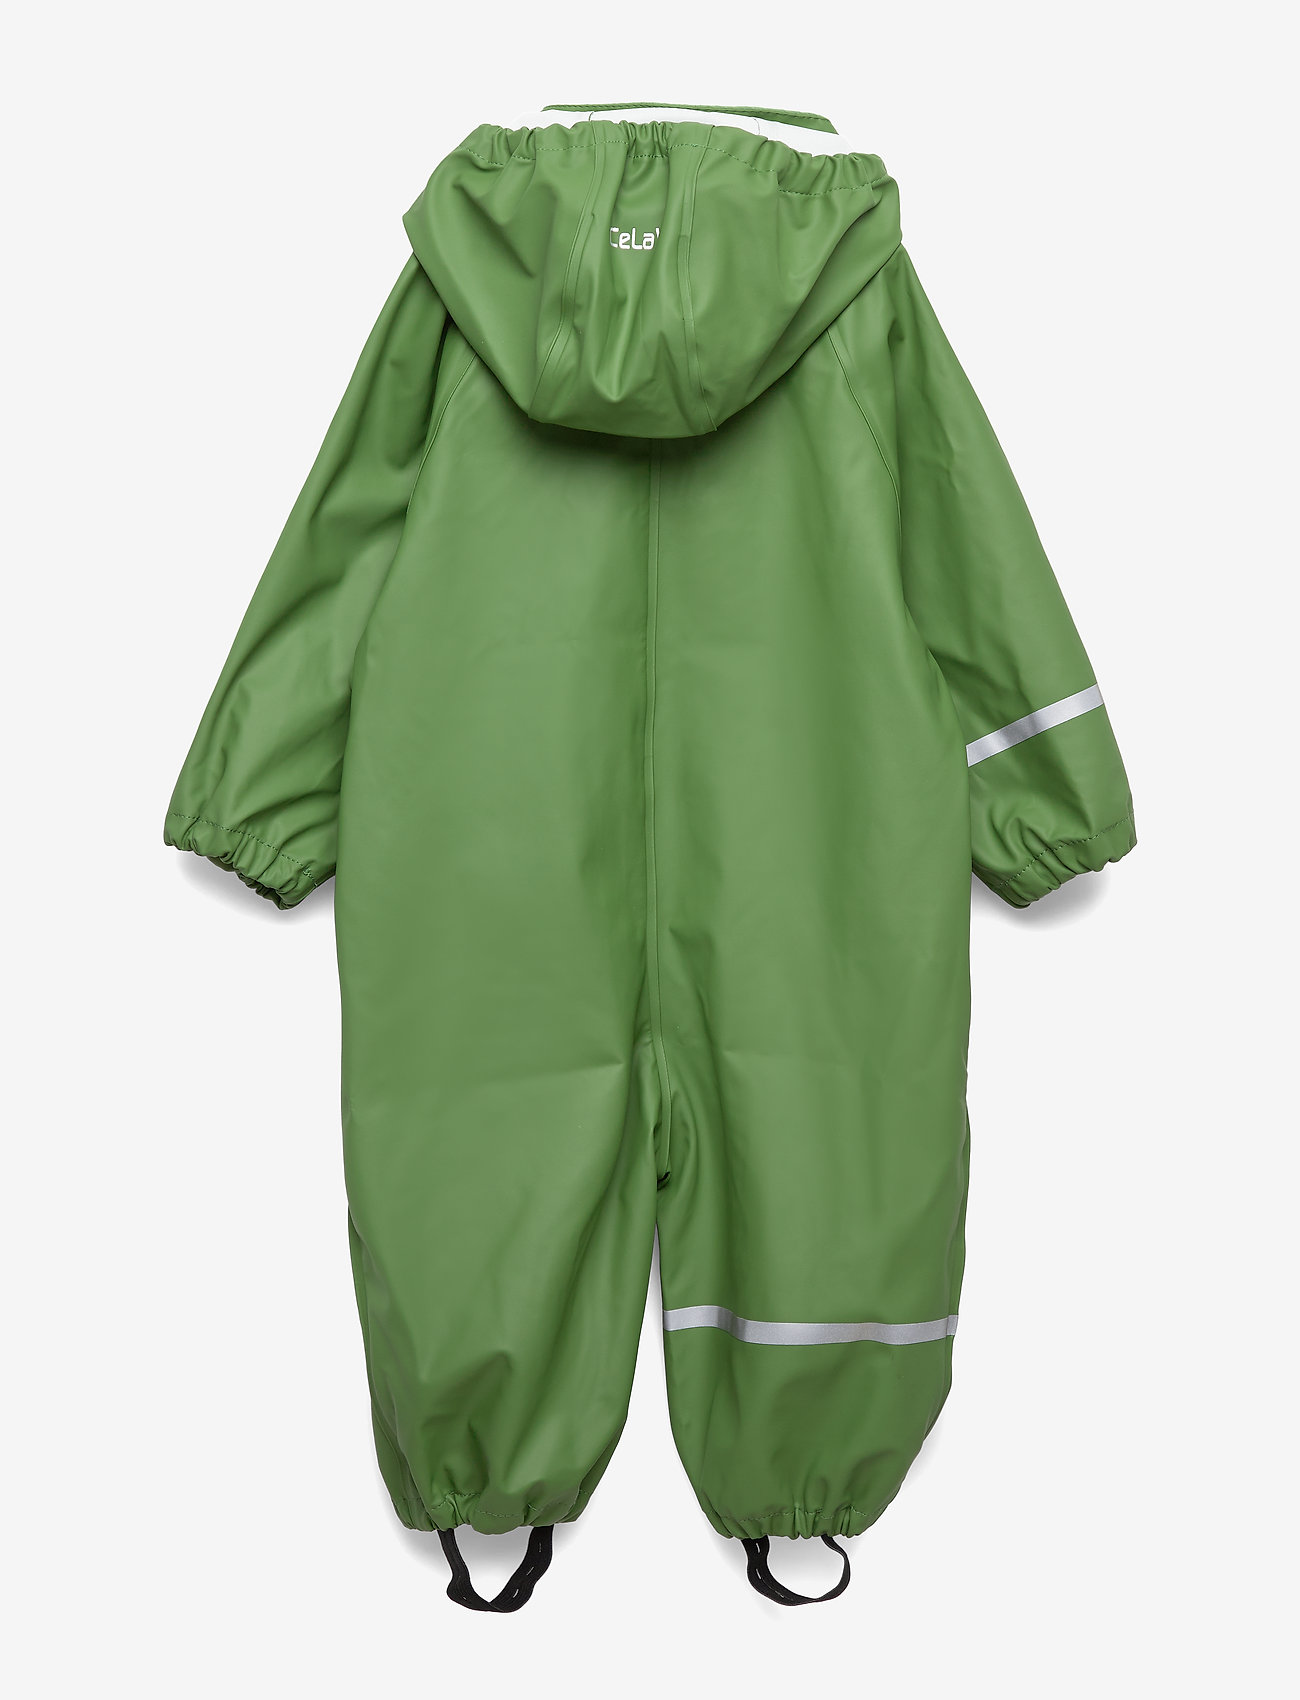 CeLaVi - Rainwear suit -Solid PU - lietus valkā kombinezoni - elm green - 1